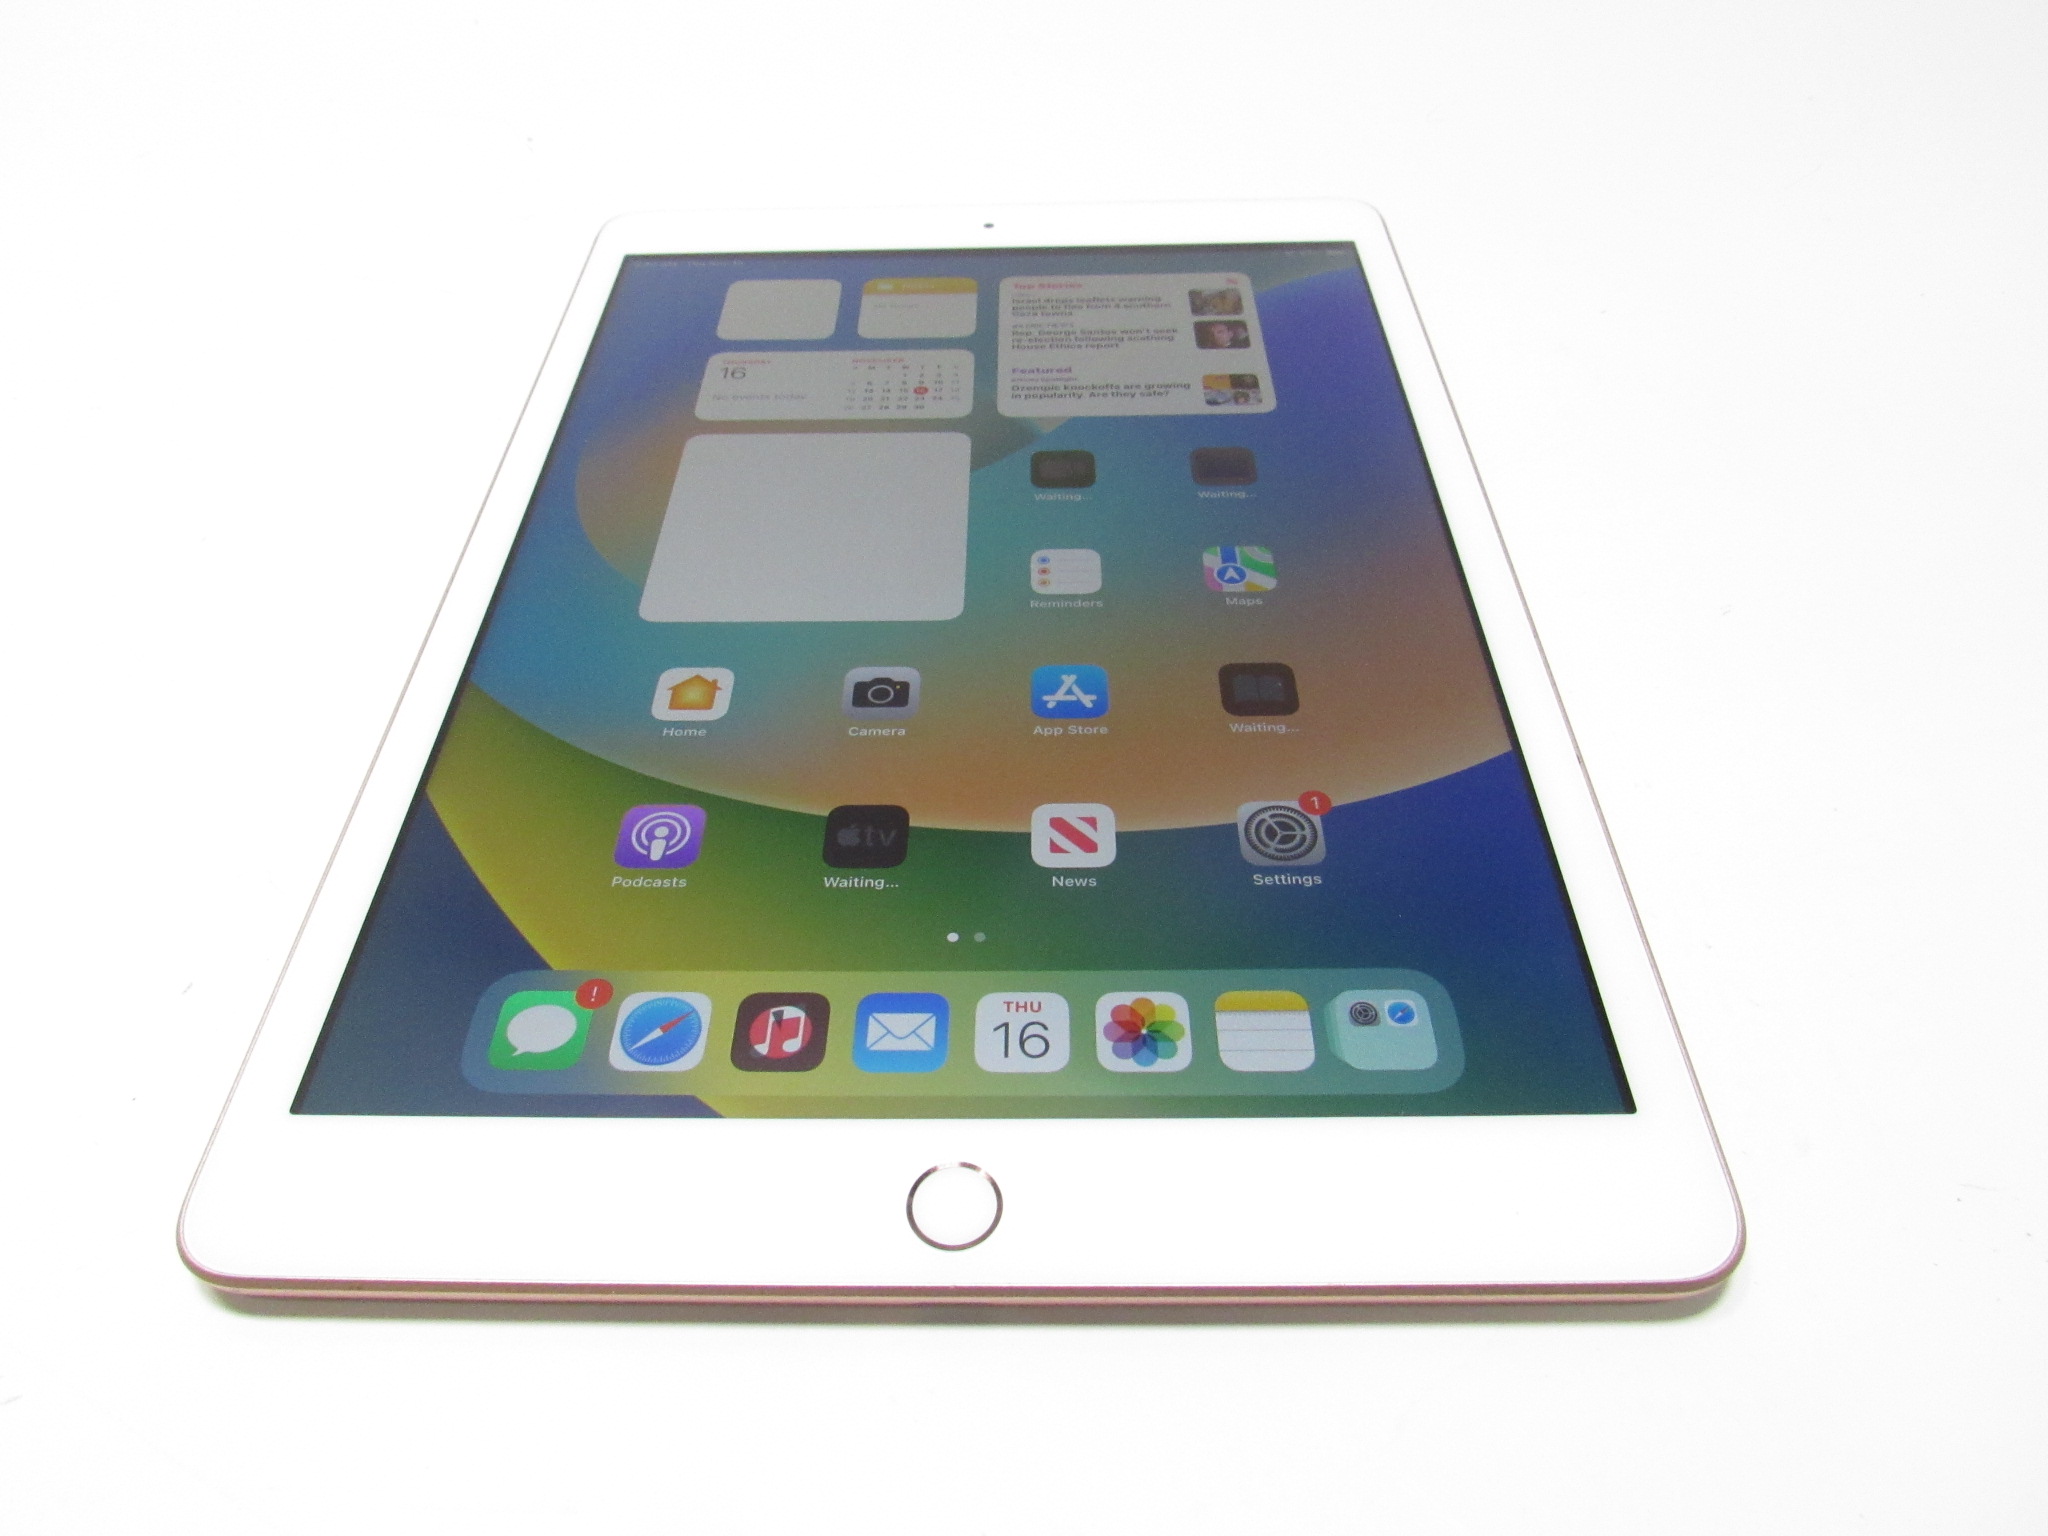 Tablet iPad Apple 32GB WIFI 10.2 MYLC2LL/A GOLD